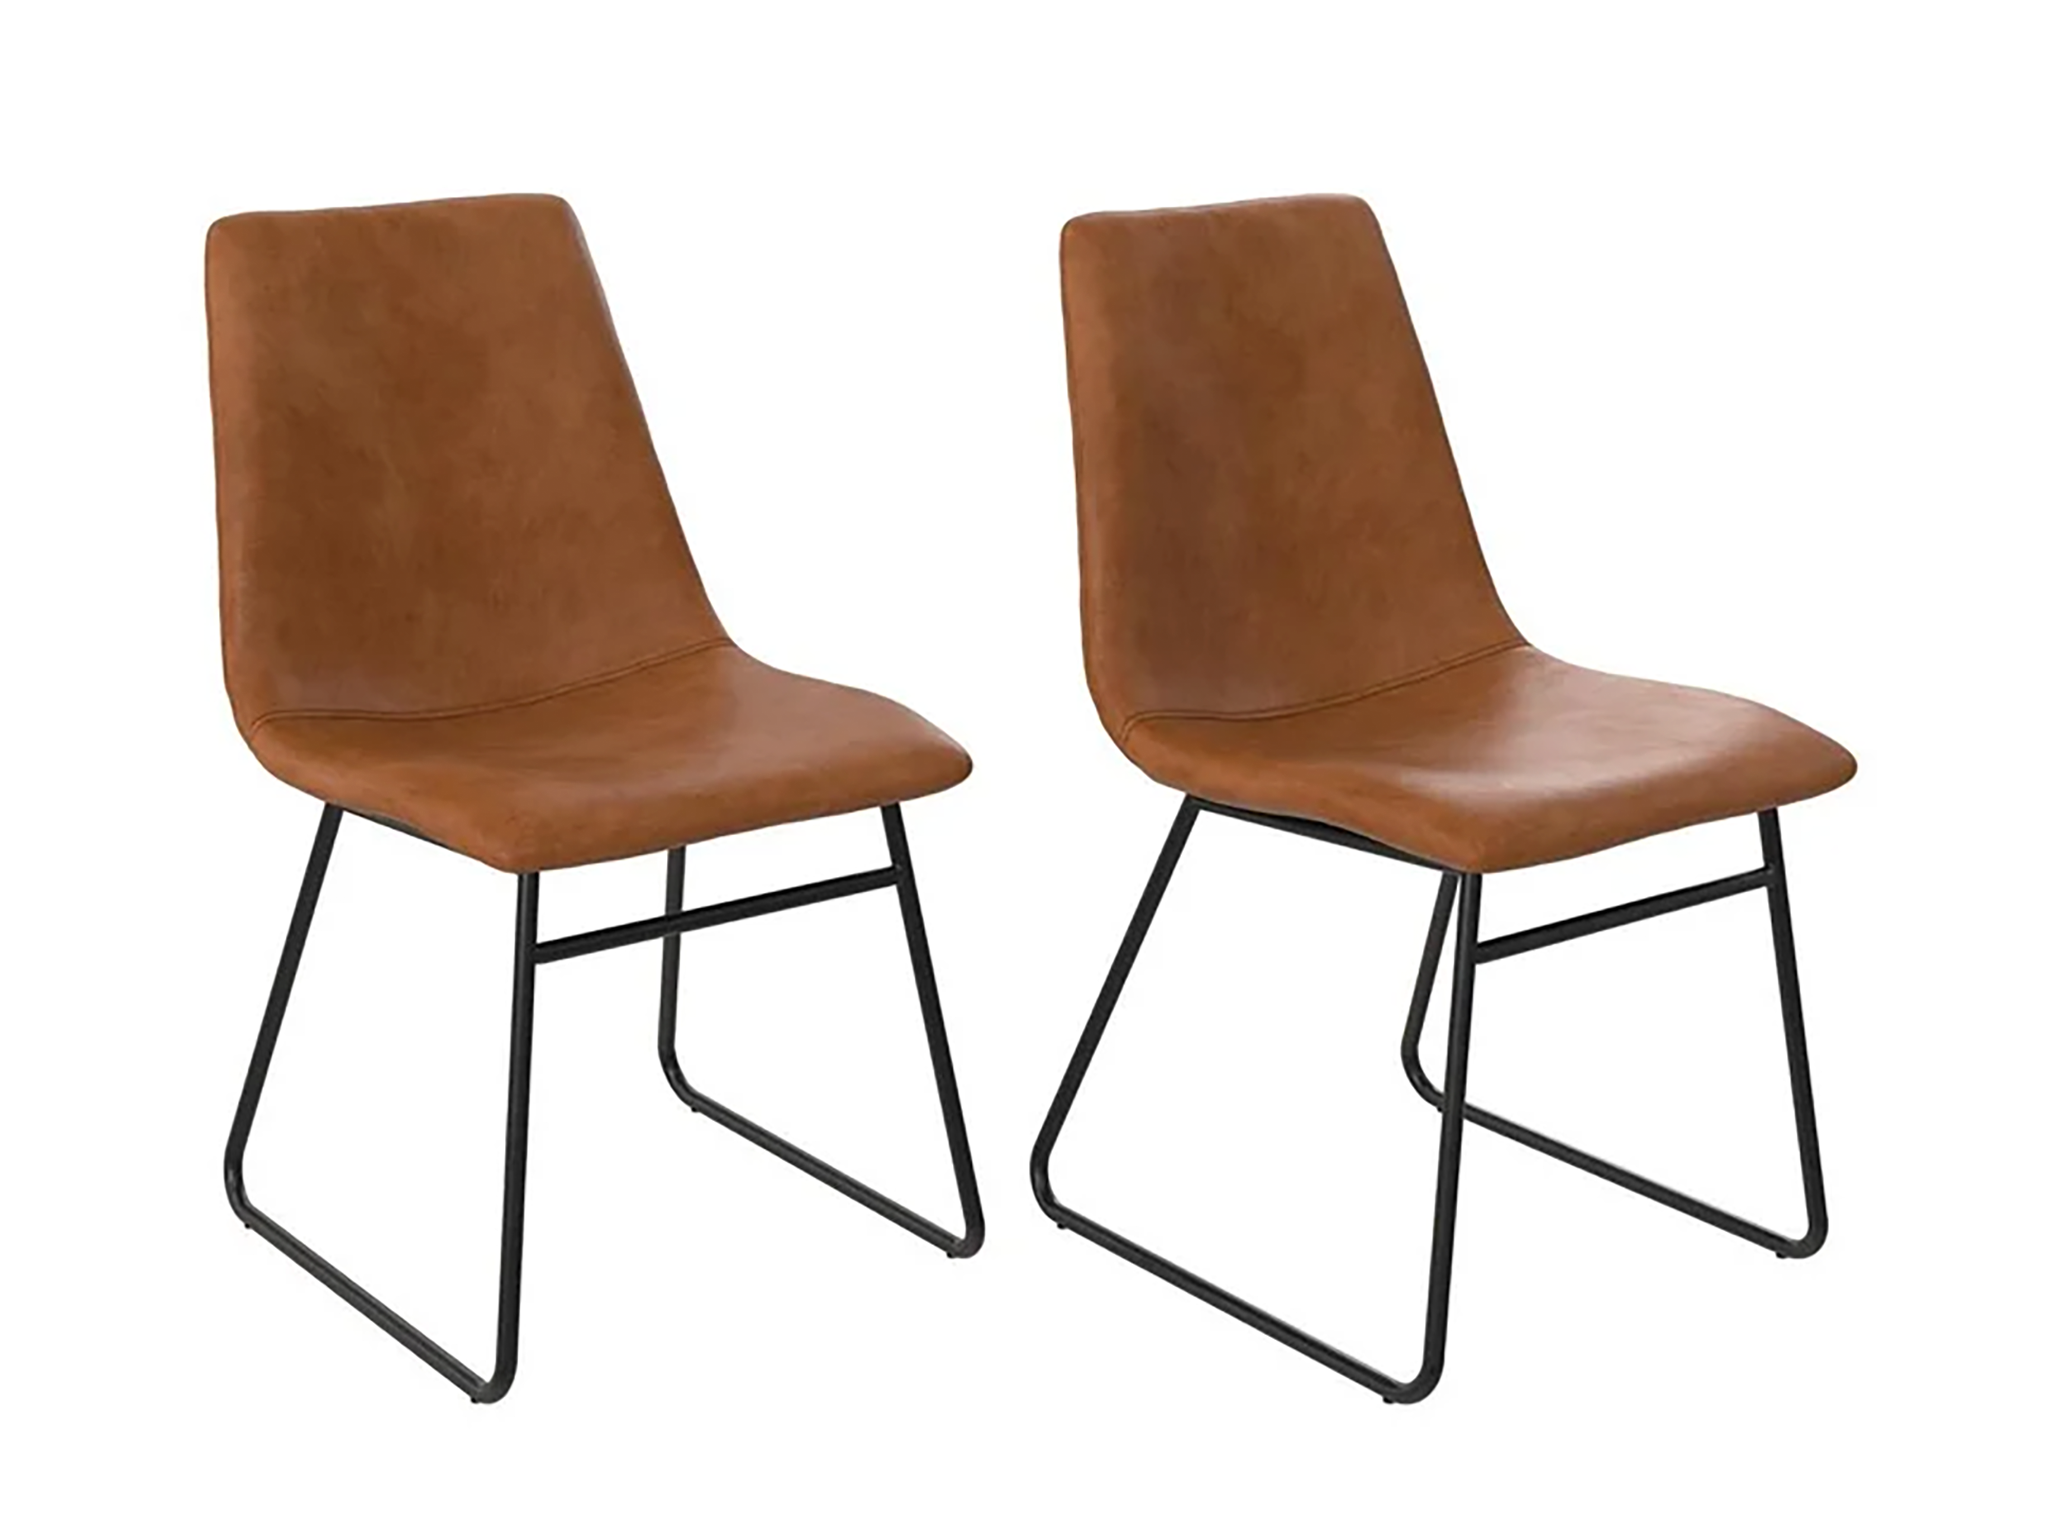 Borough Wharf Lavanya side chair in brown (set of 2)